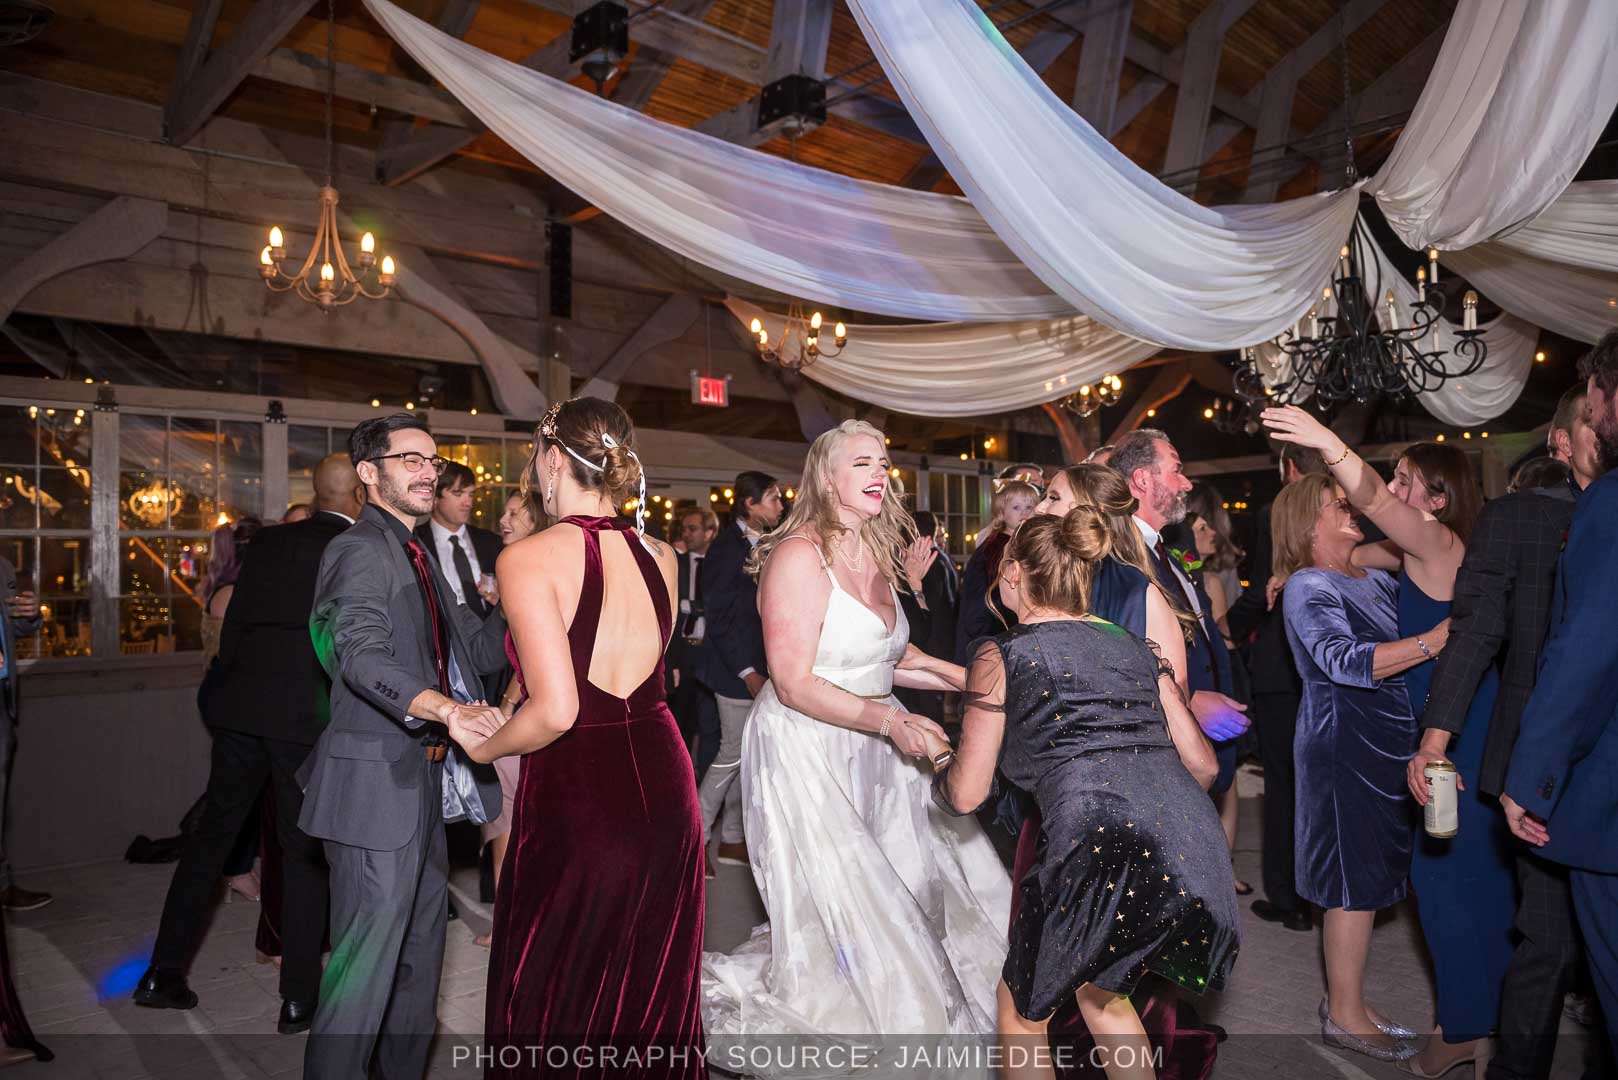 Rocky's Lake Estate Wedding Venue - reception - wedding guest dancing inside pavilion with ceiling drapes